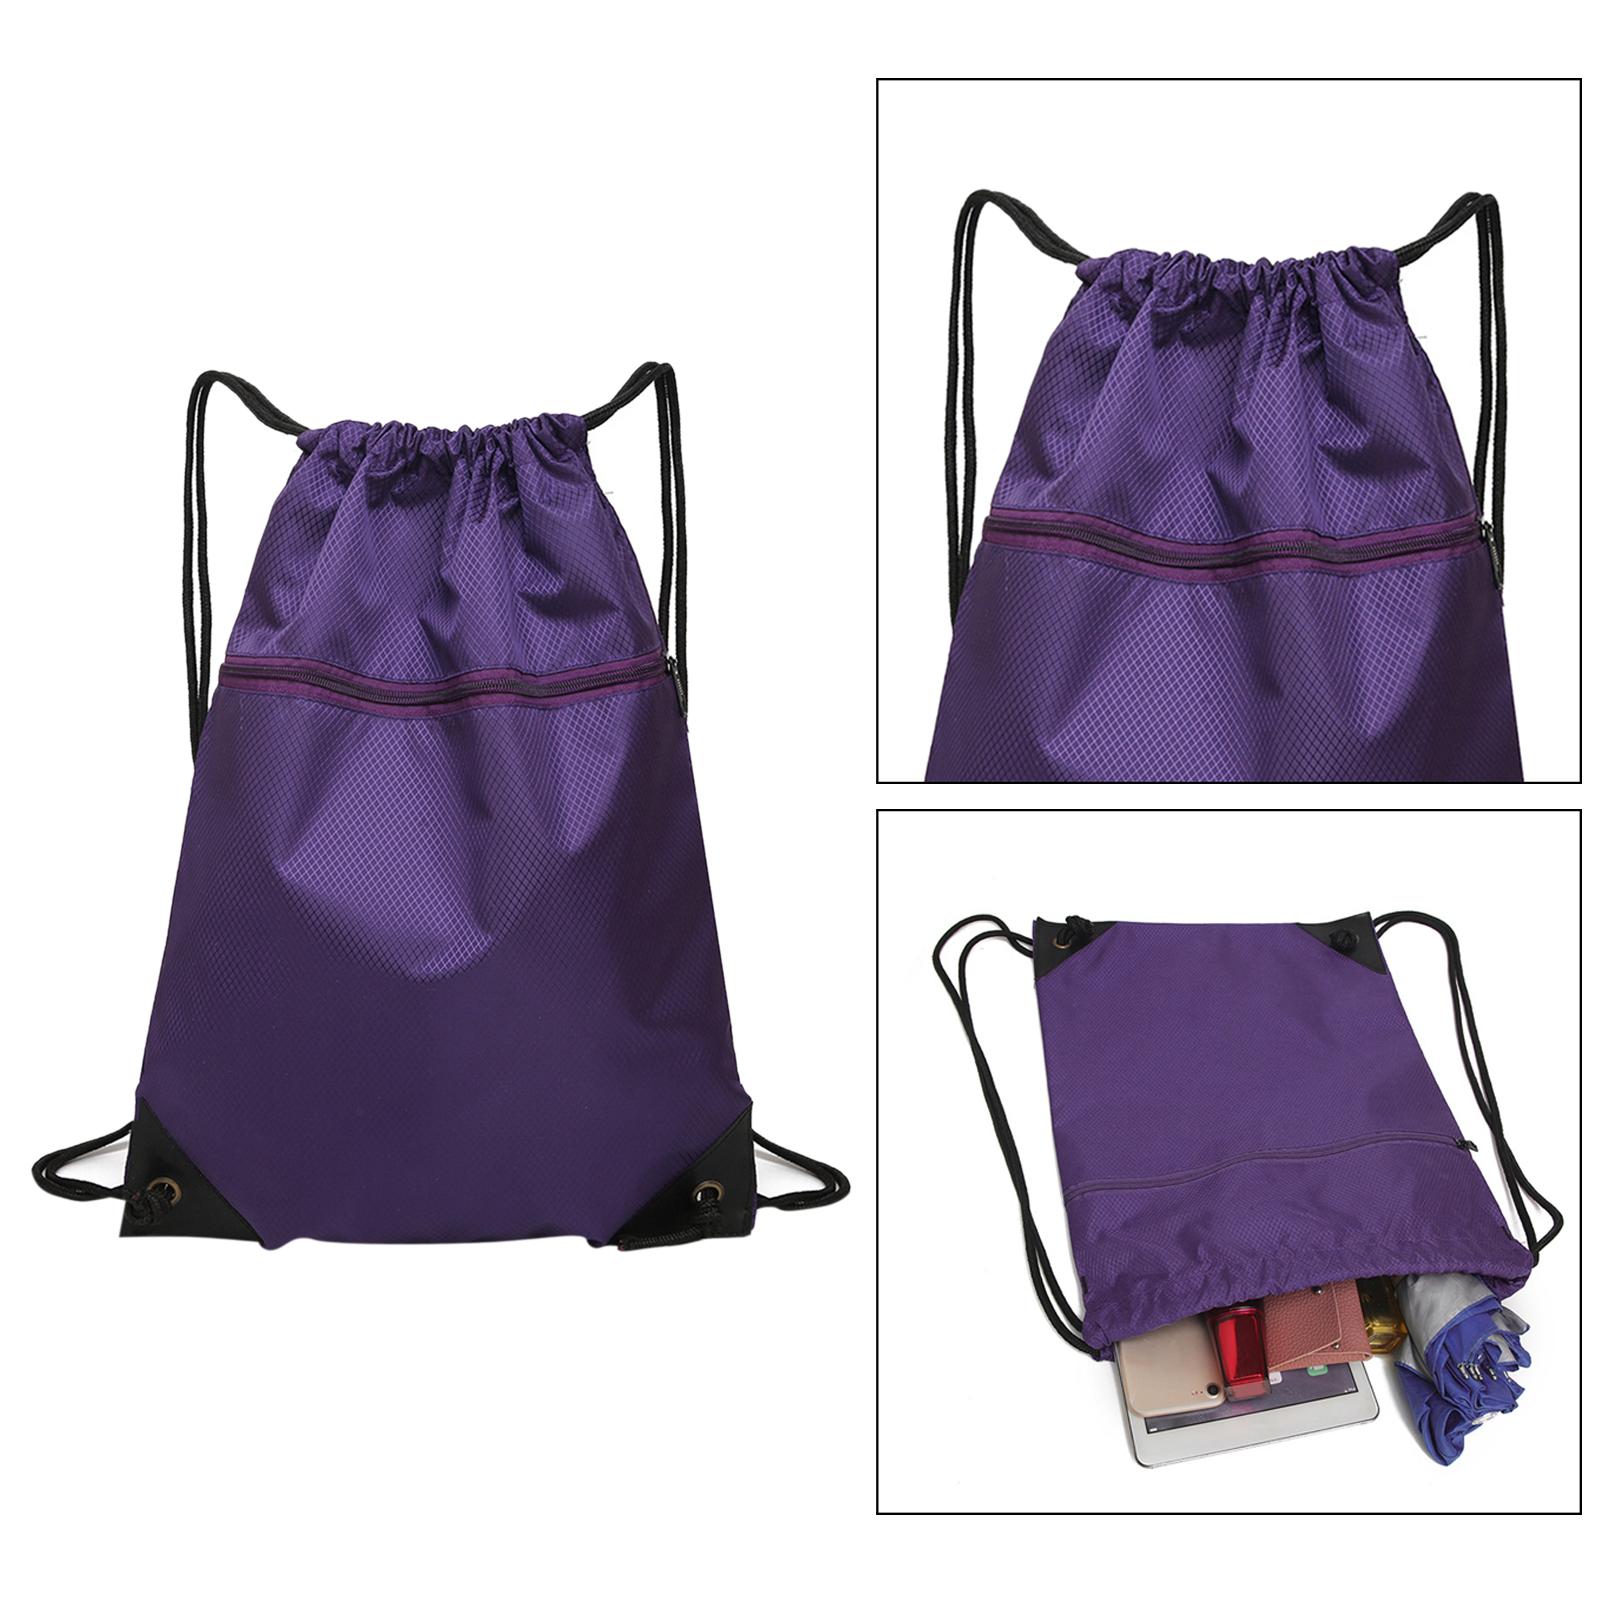 Travel Nylon Drawstring Bag Sack Beach Gym Backpack Shoes Bags Purple